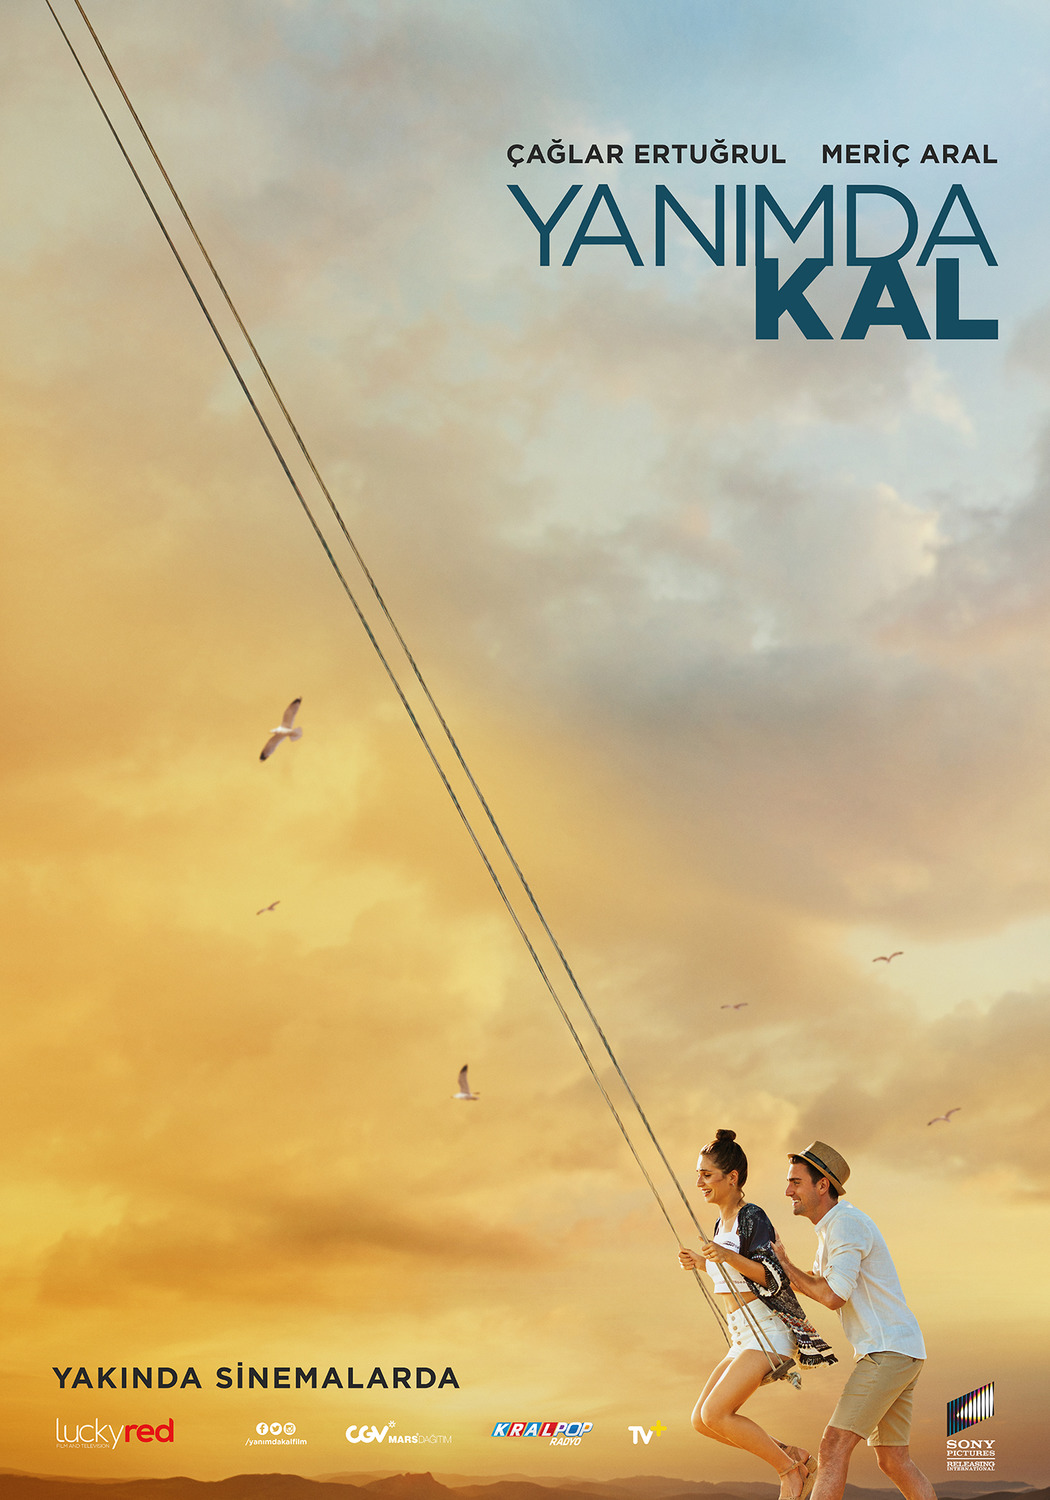 Extra Large Movie Poster Image for Yanimda Kal (#1 of 3)